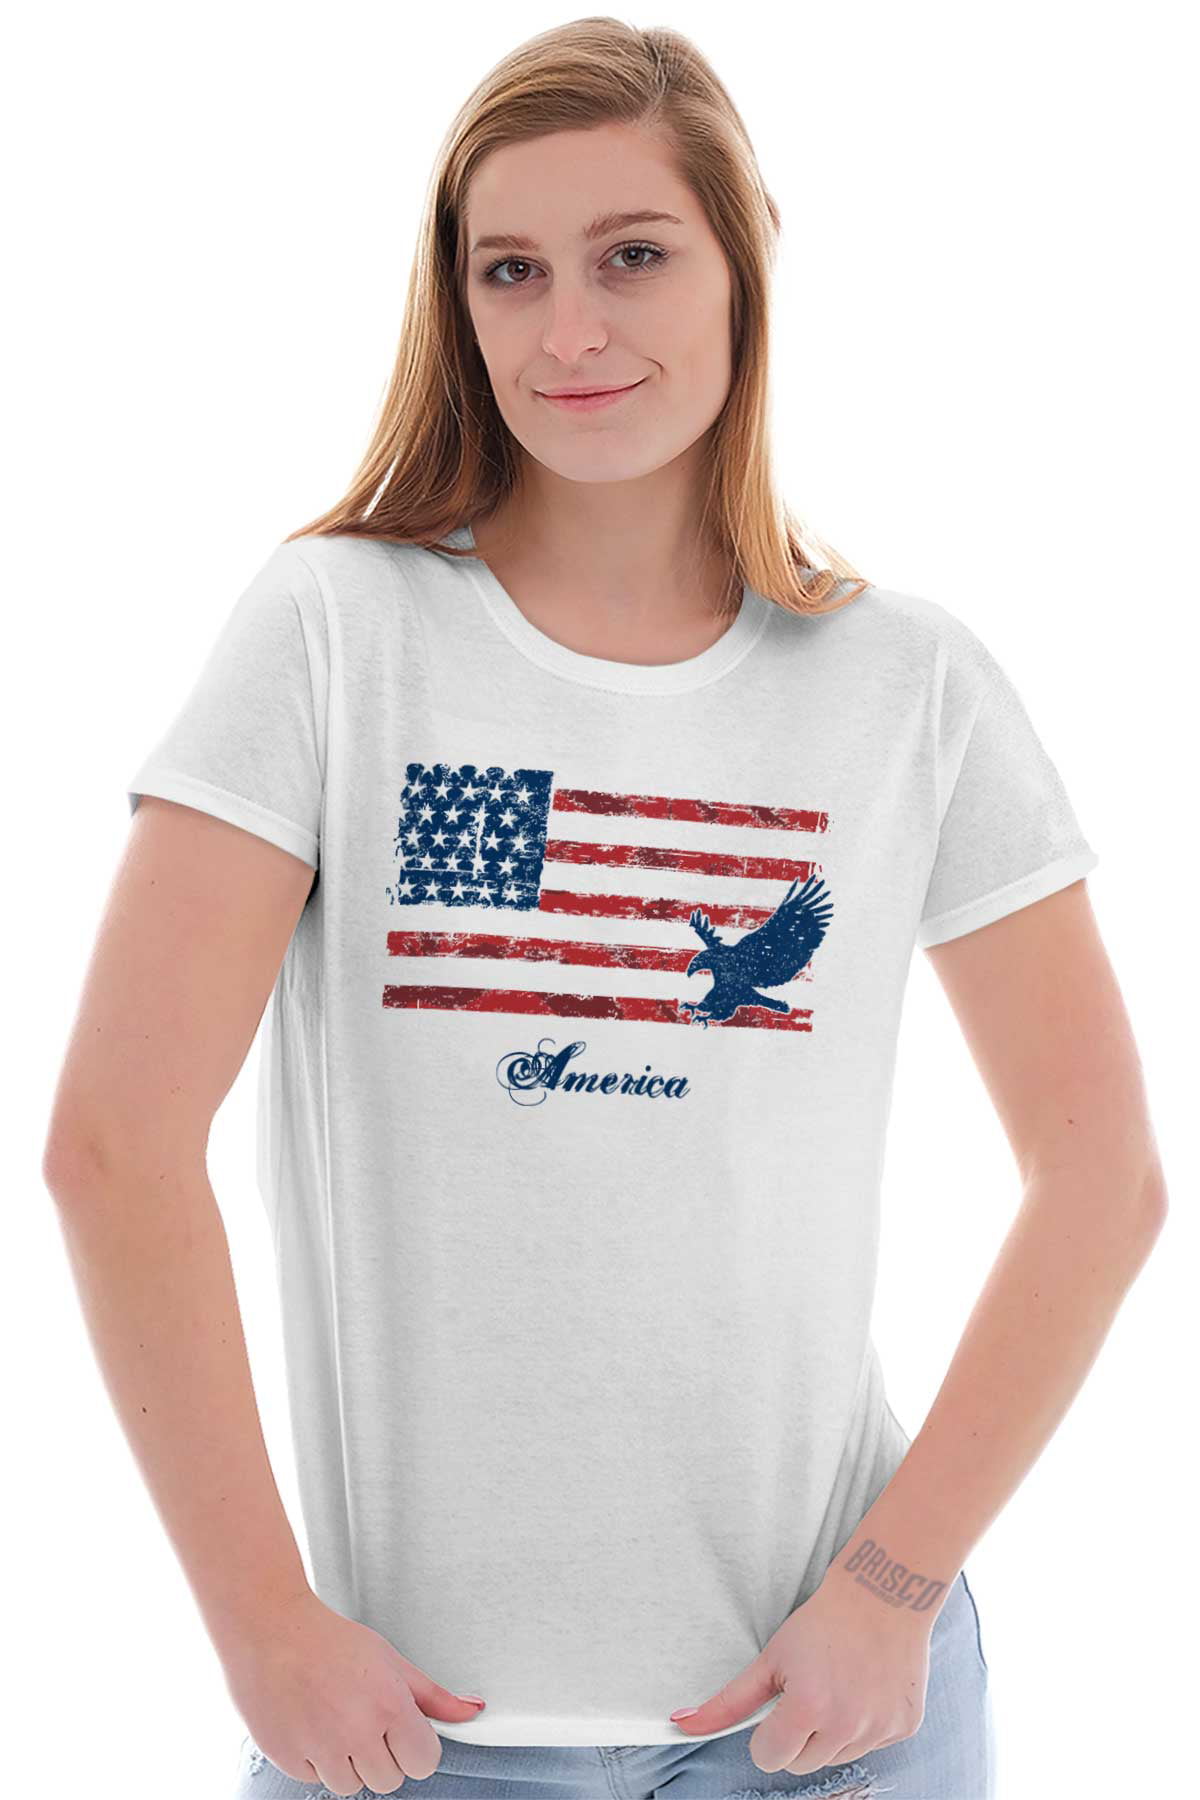 Brisco Brands - American Flag Tees Shirts Tshirts For Womens Bald Eagle ...